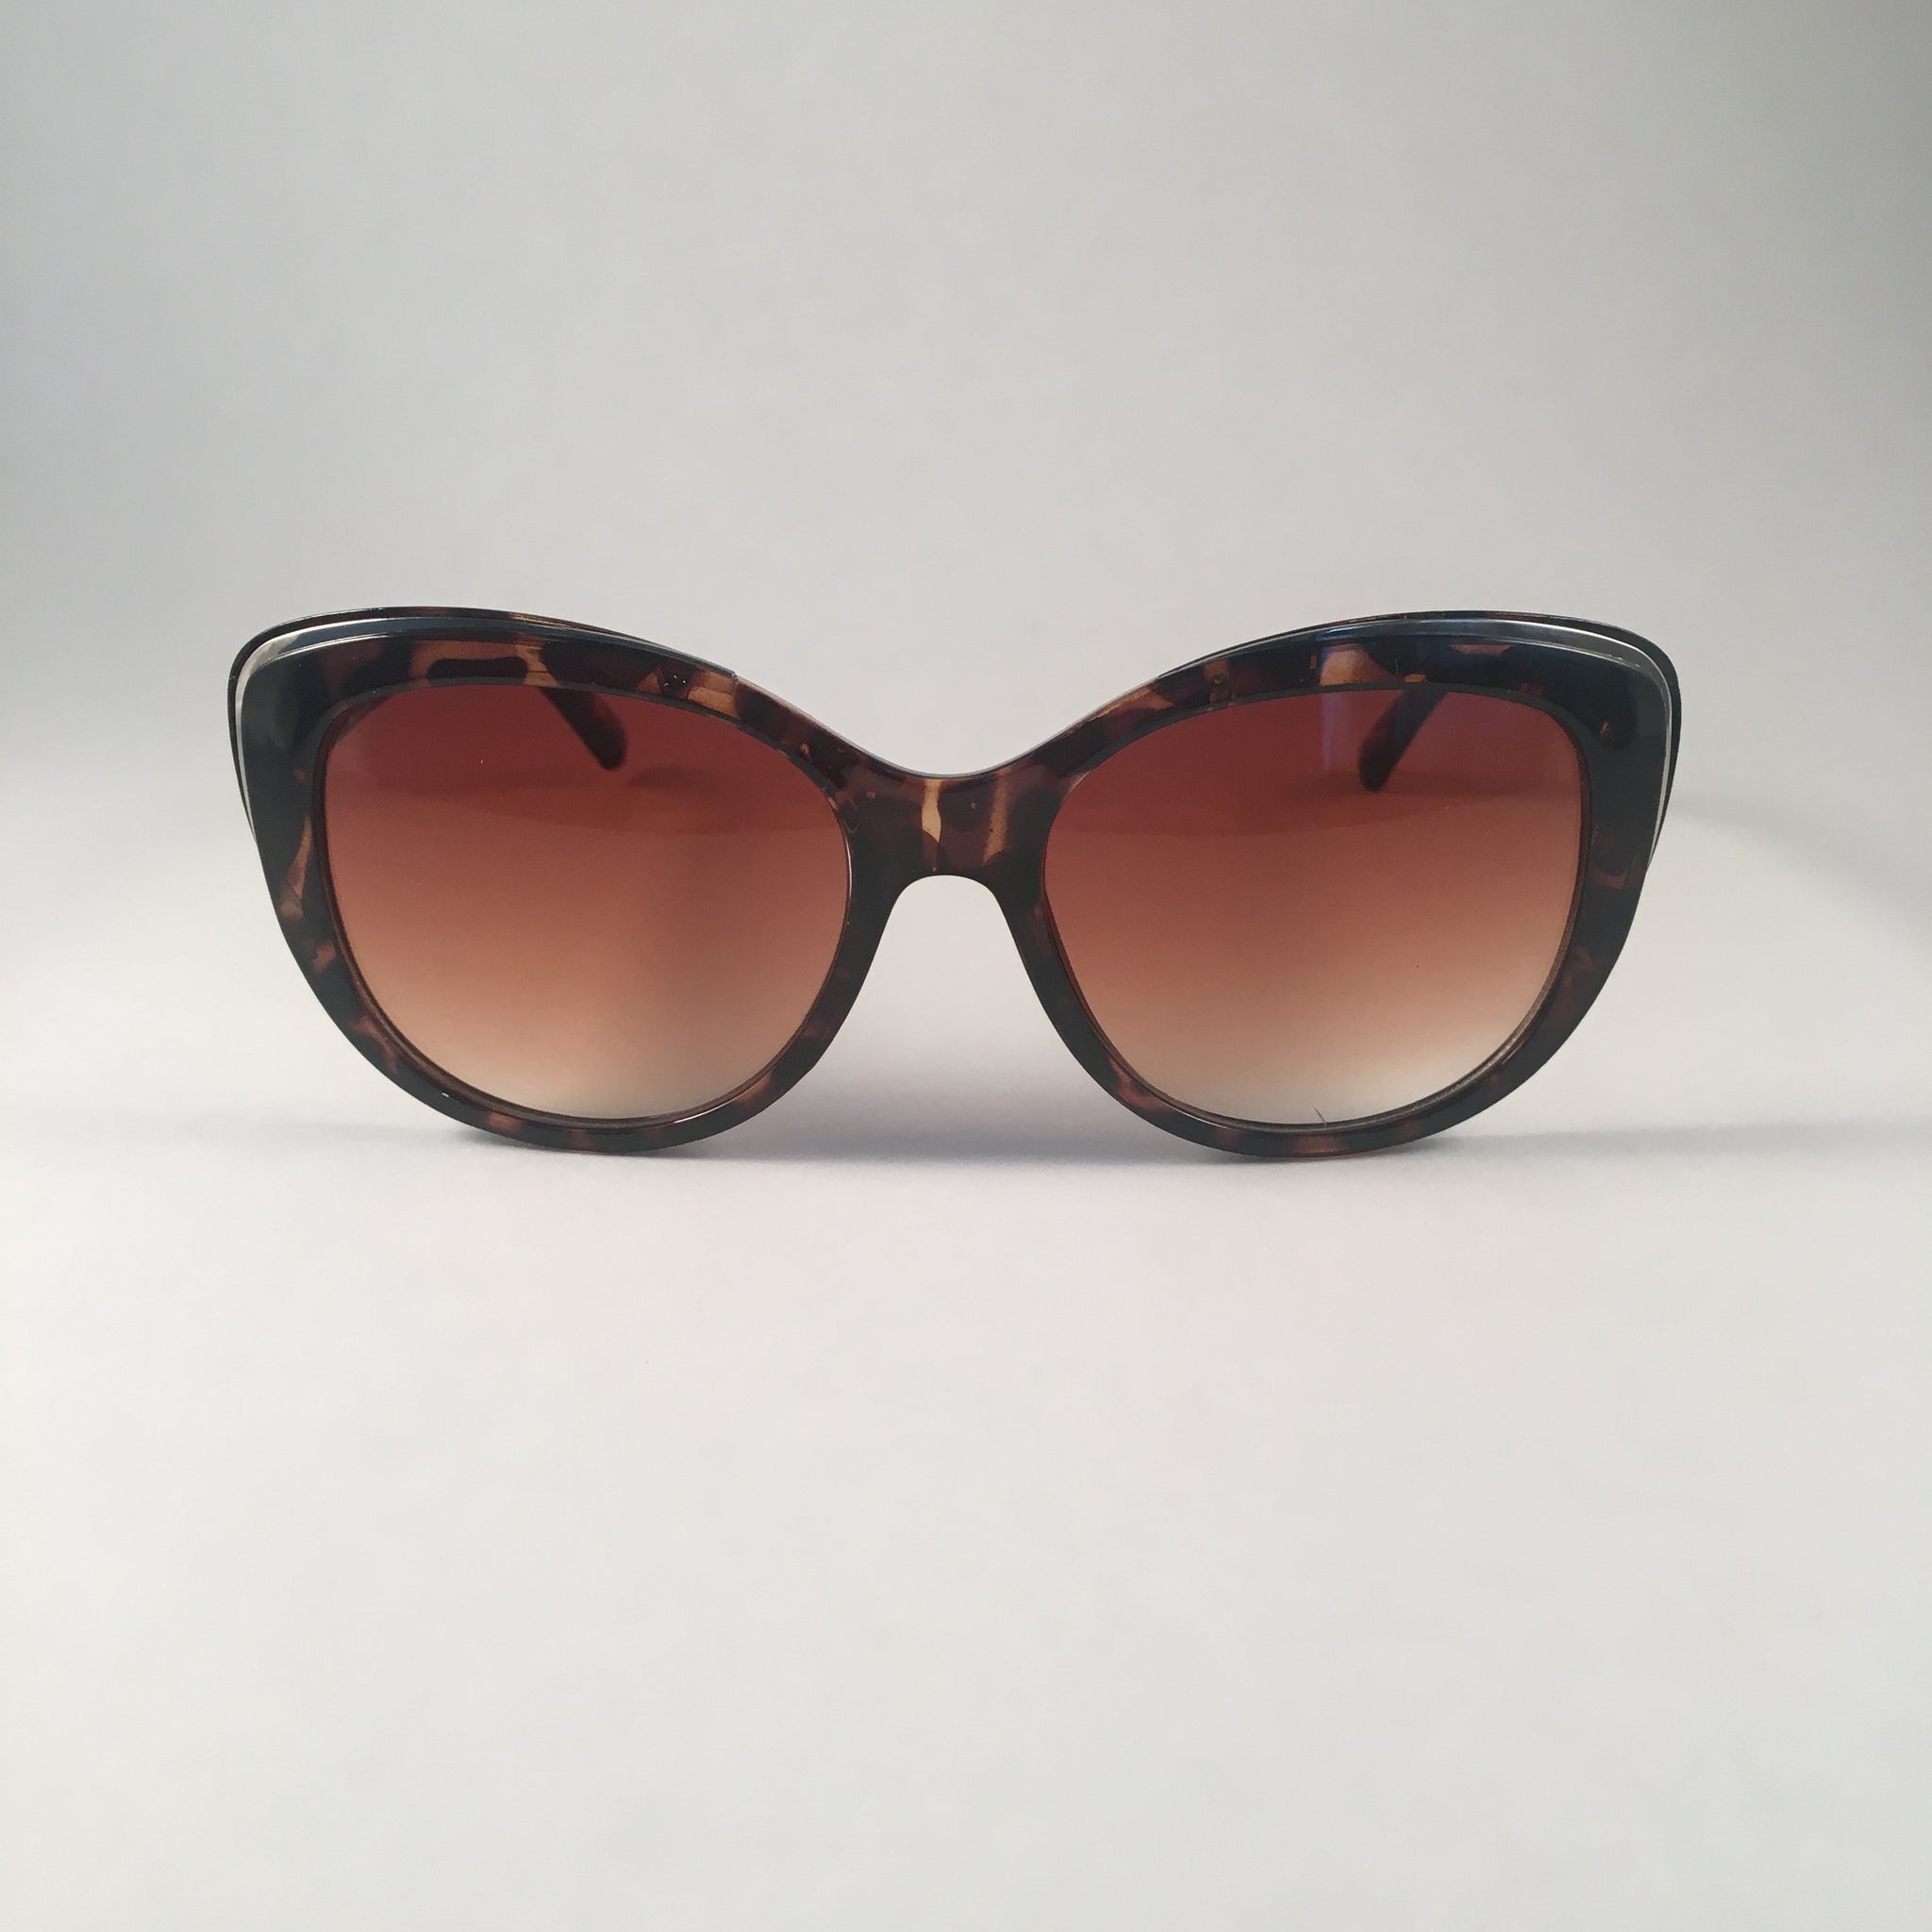 Tan Tortoiseshell Curved Sunglasses